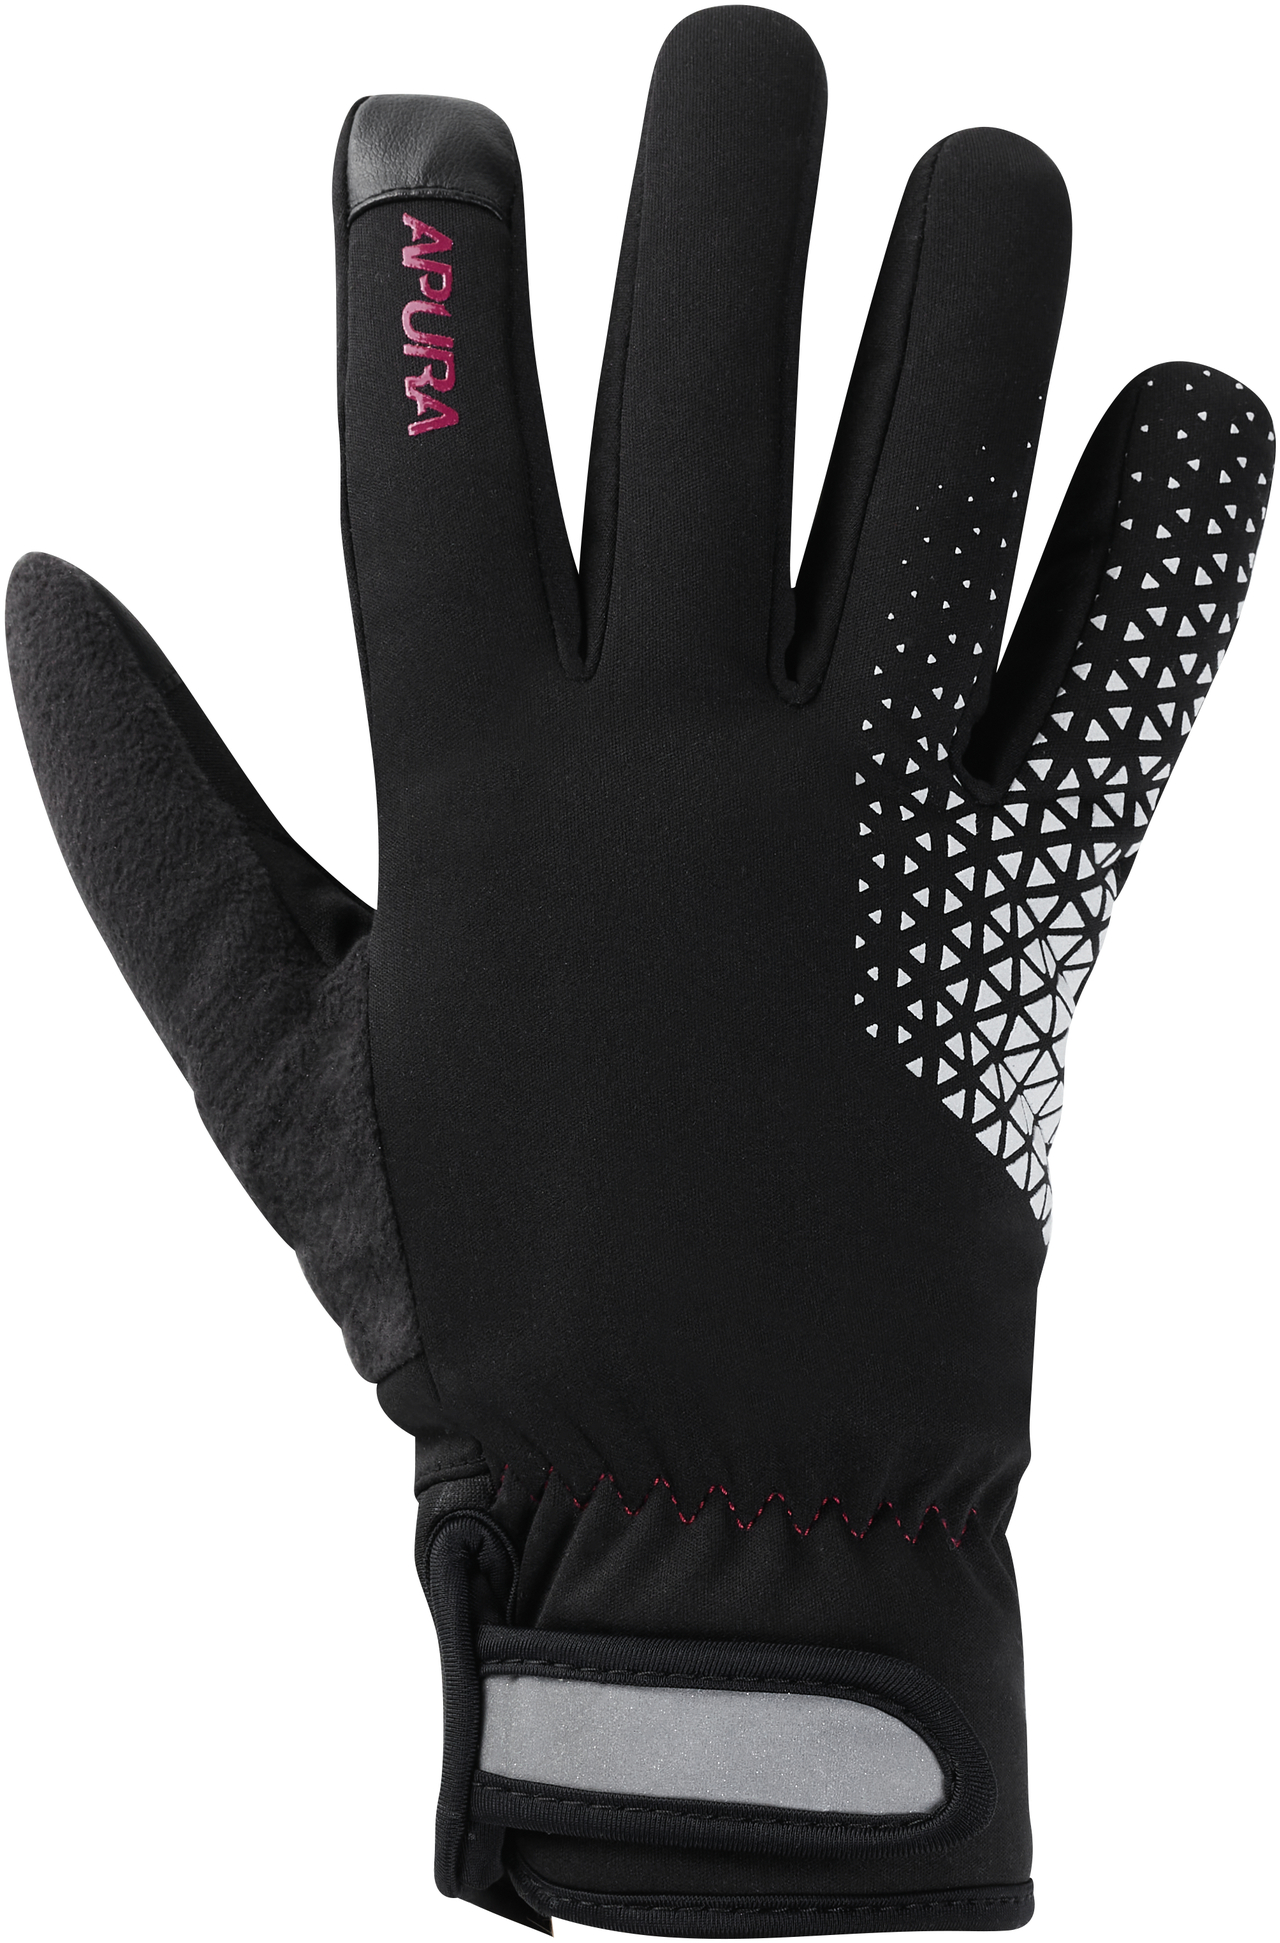 Bekleidung/Handschuhe: Apura  Damen Winterhandschuhe Ionosphere M Schwarz